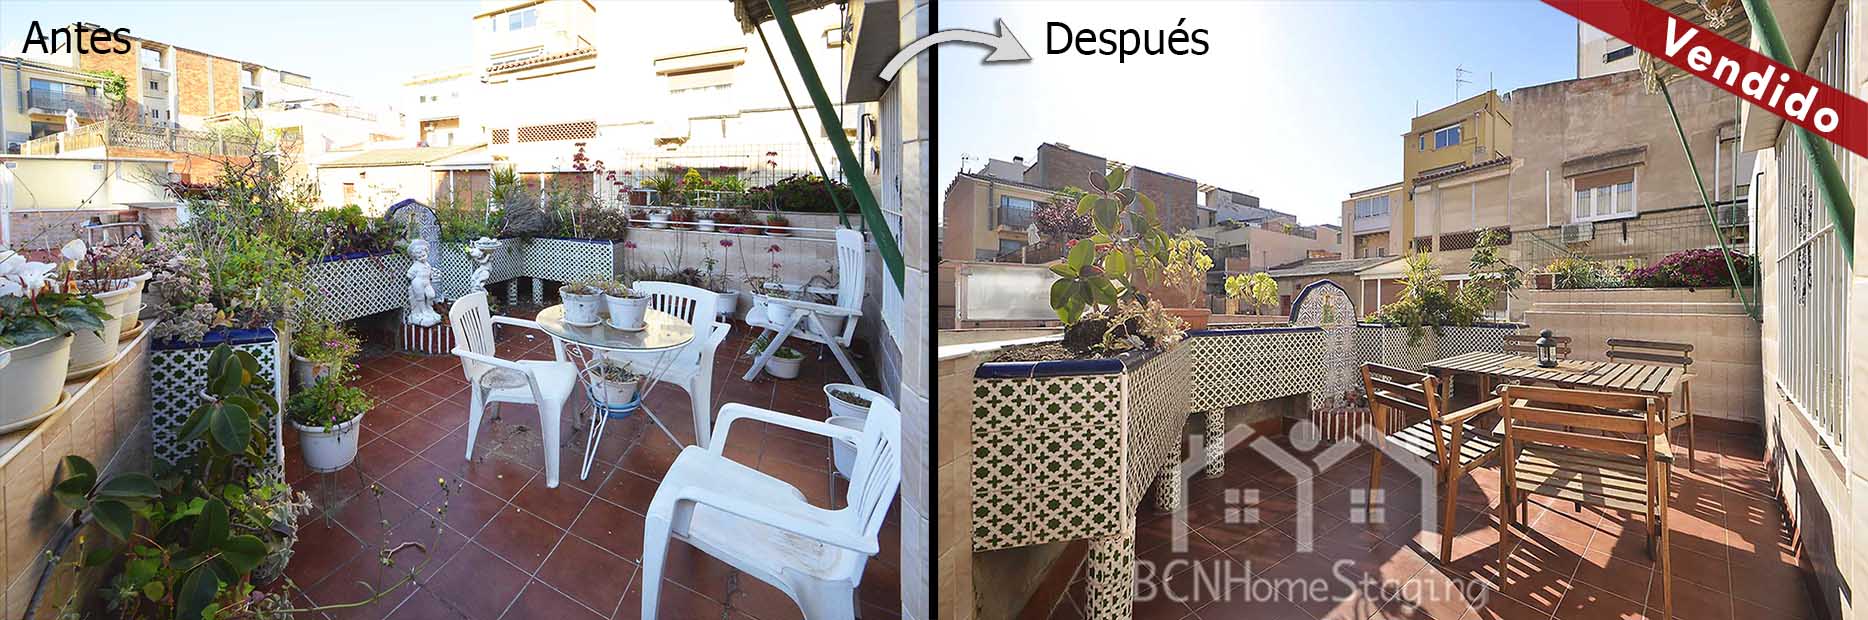 home-staging-barcelona-exterior-terraza-antes-despues